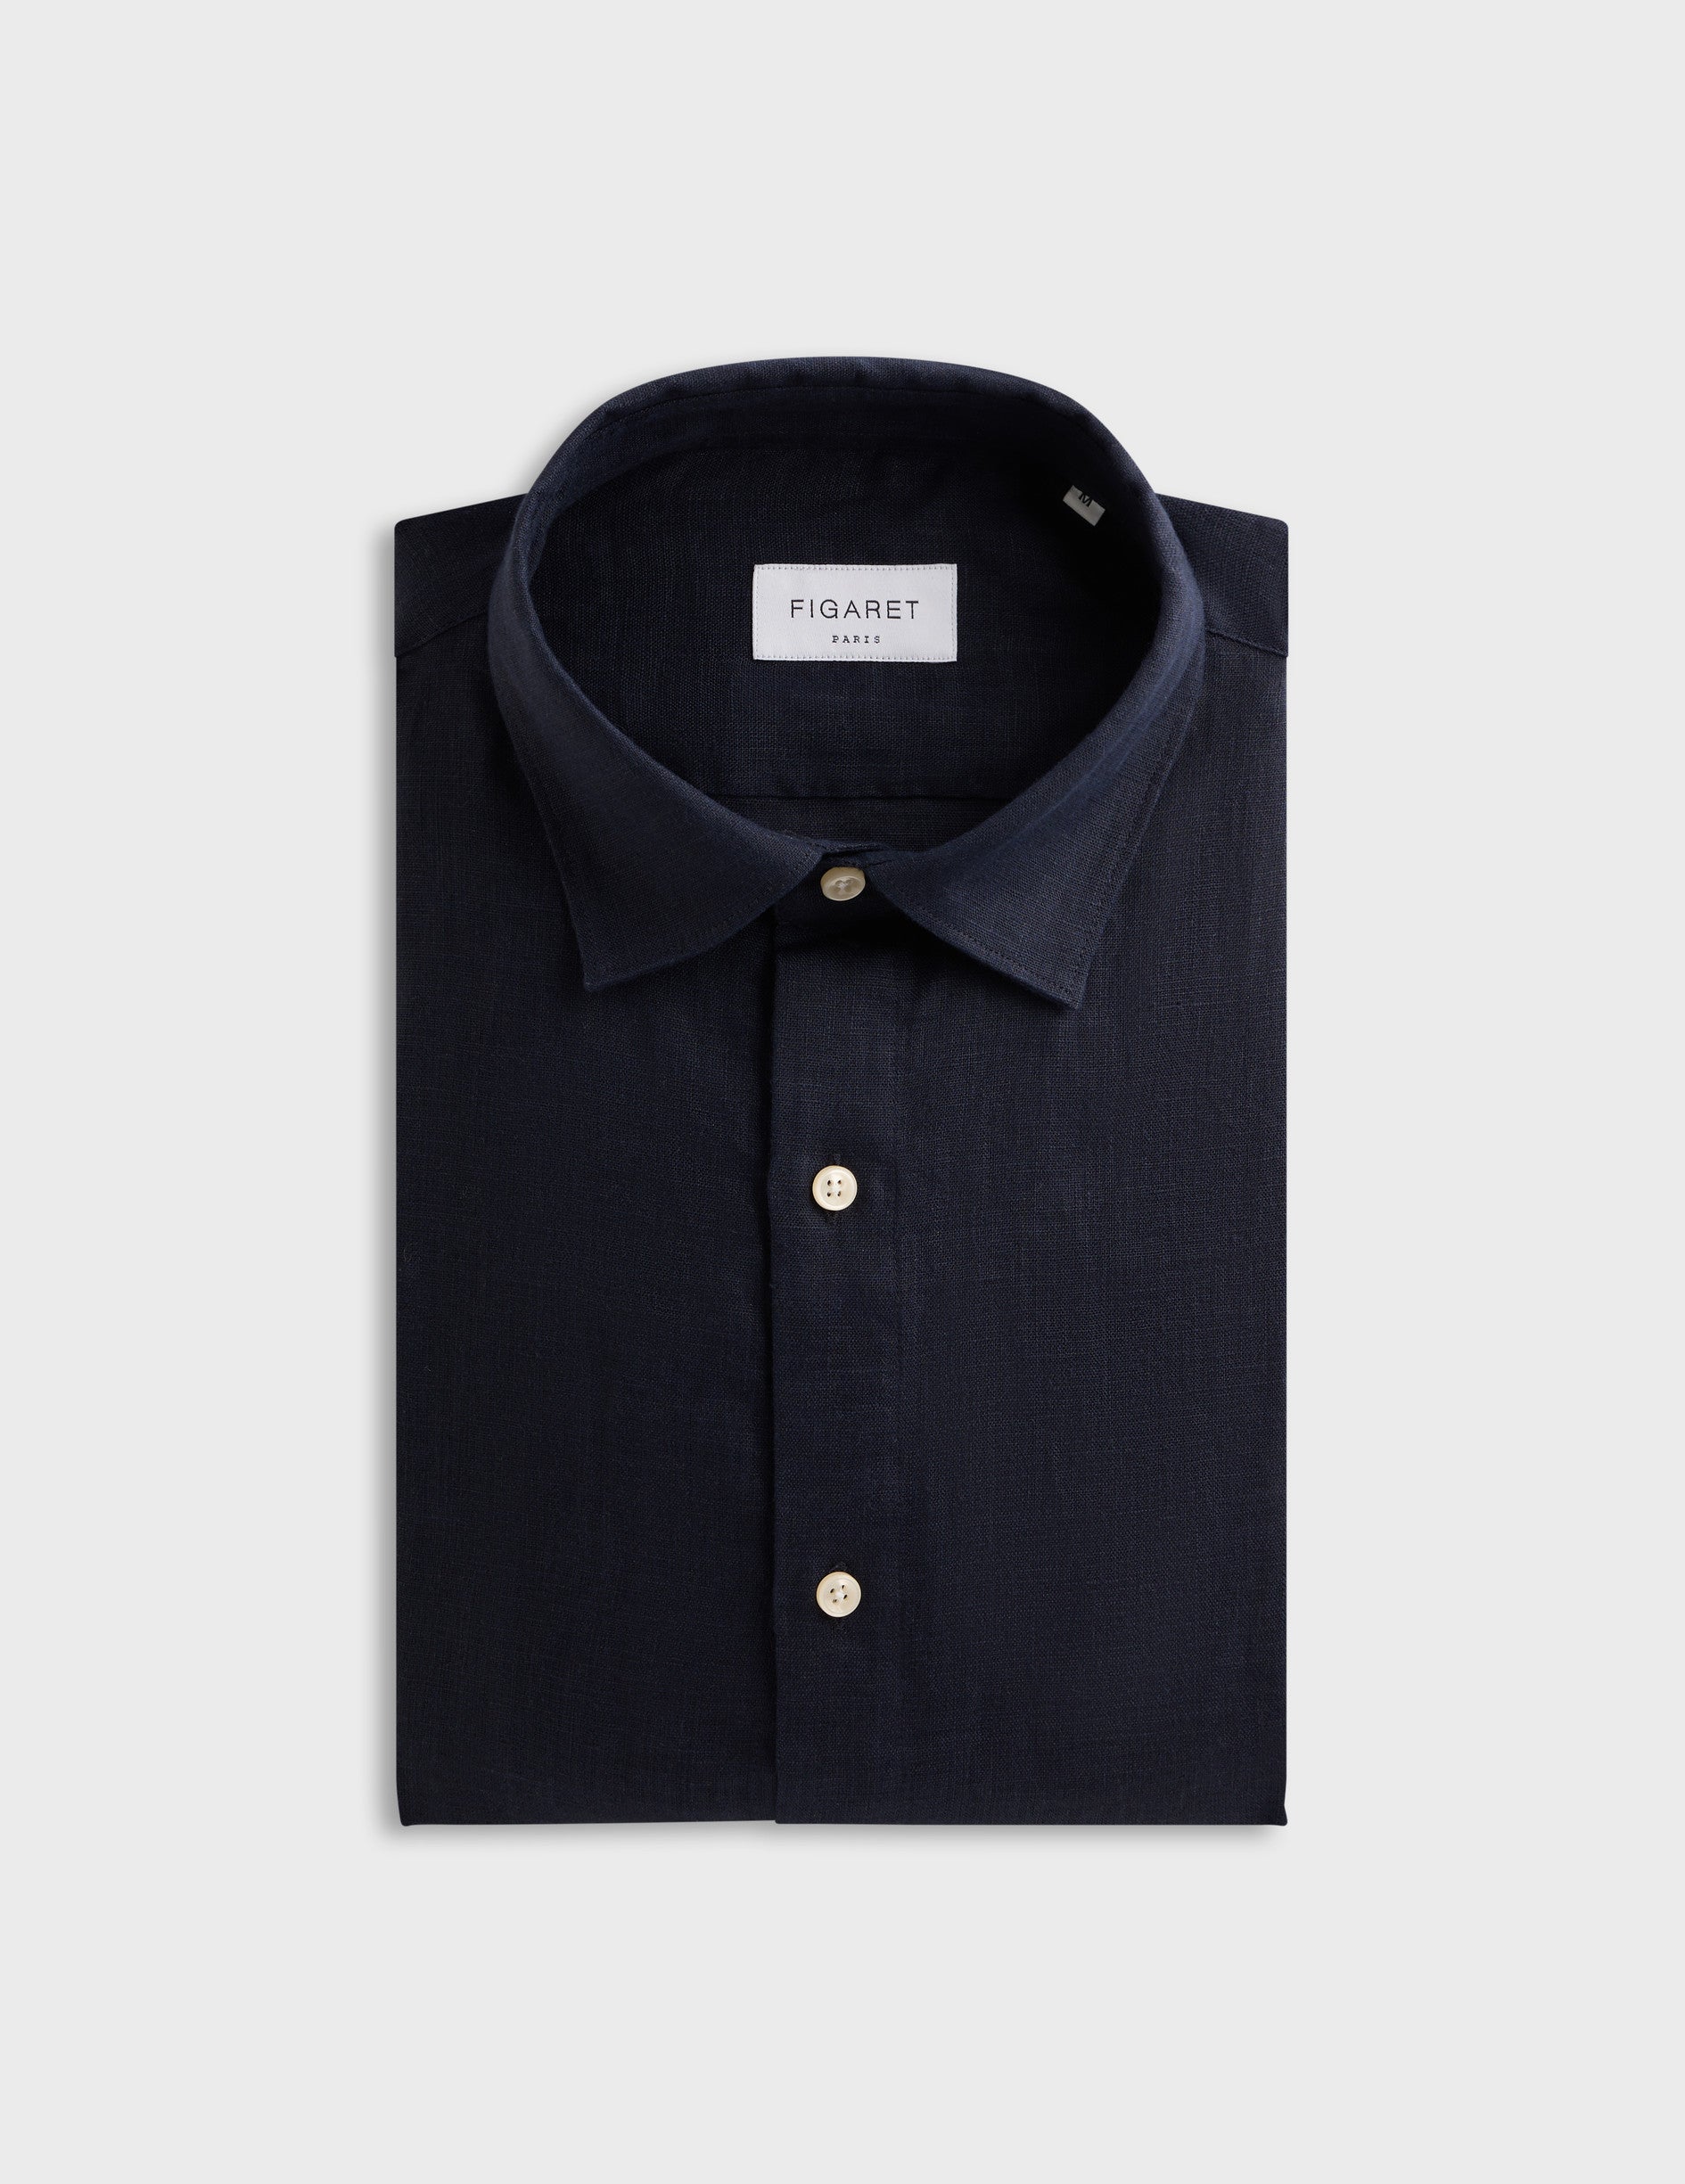 Auguste shirt in navy linen - Linen - French Collar